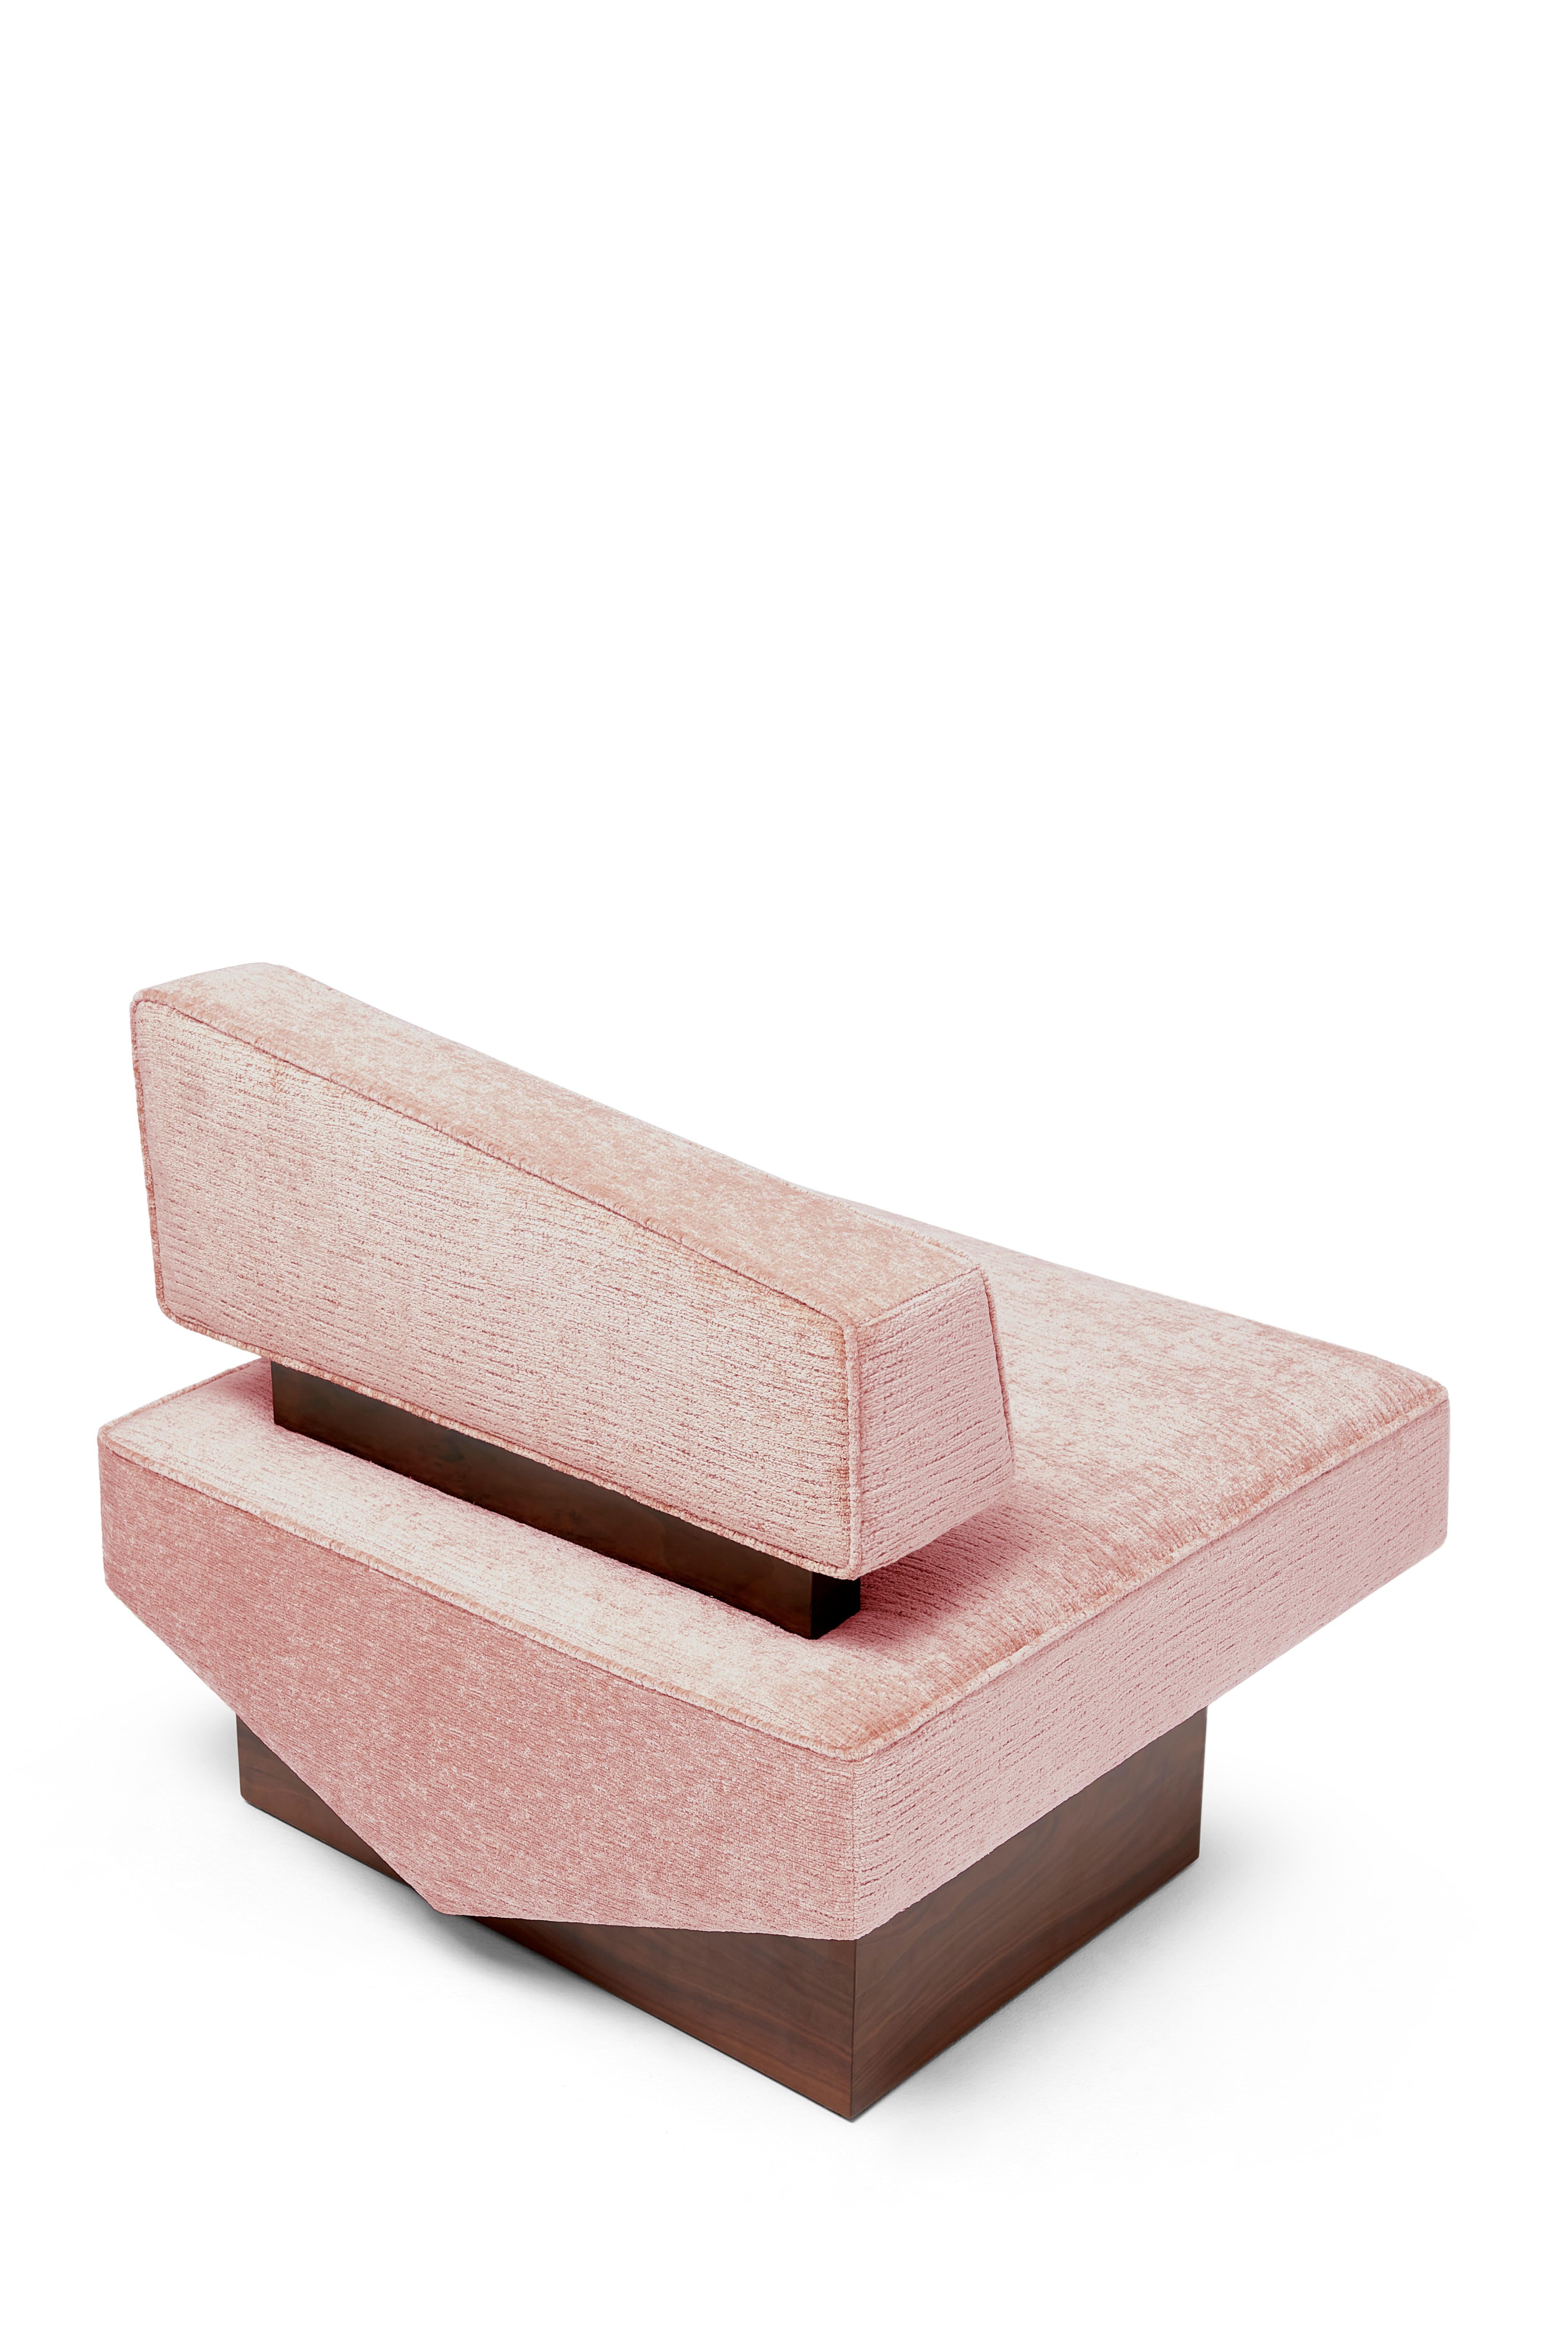 Organic Modern Contemporary Armchair 'Divergent' by Marta Delgado, Walnut, Pink For Sale